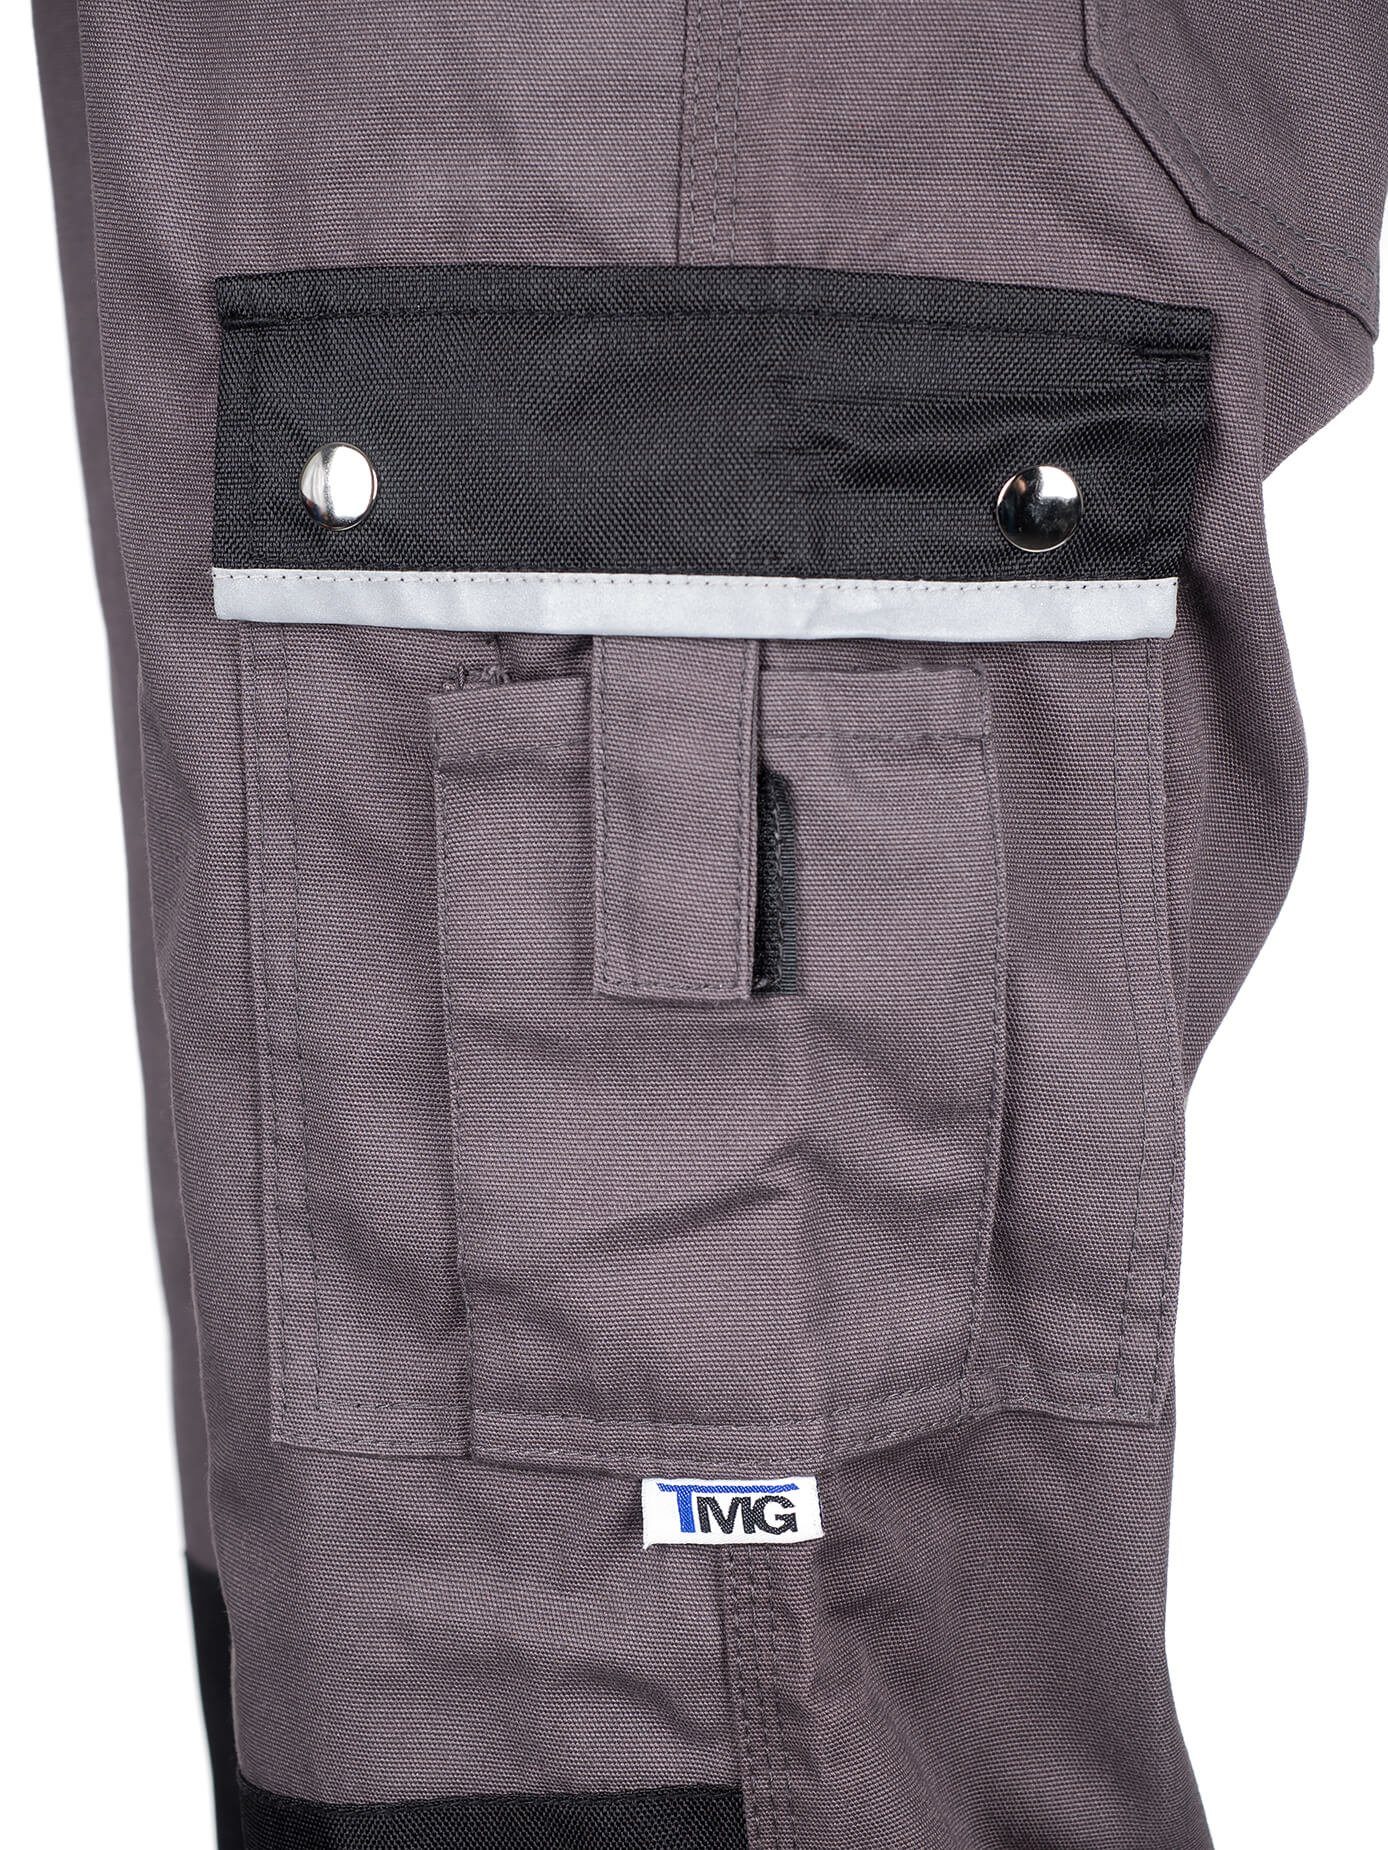 Arbeitshose TMG Cargohose grau/schwarz Arbeitshose Bundhose Style International